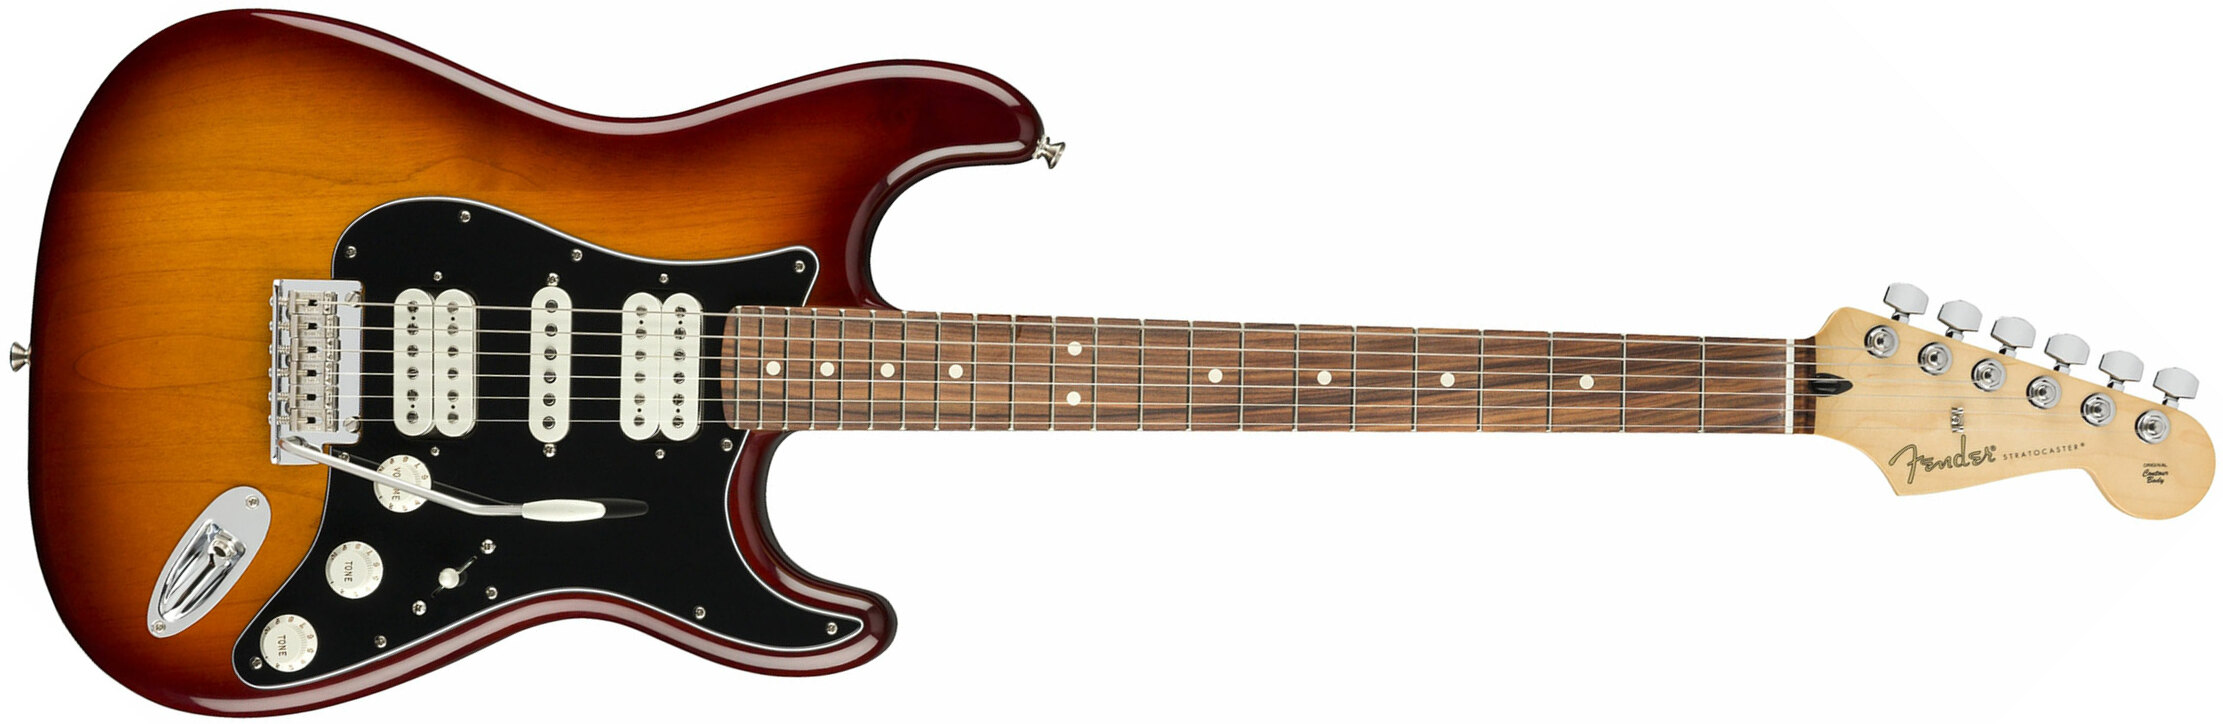 Fender Strat Player Mex Hsh Pf - Tobacco Burst - Guitarra eléctrica con forma de str. - Main picture